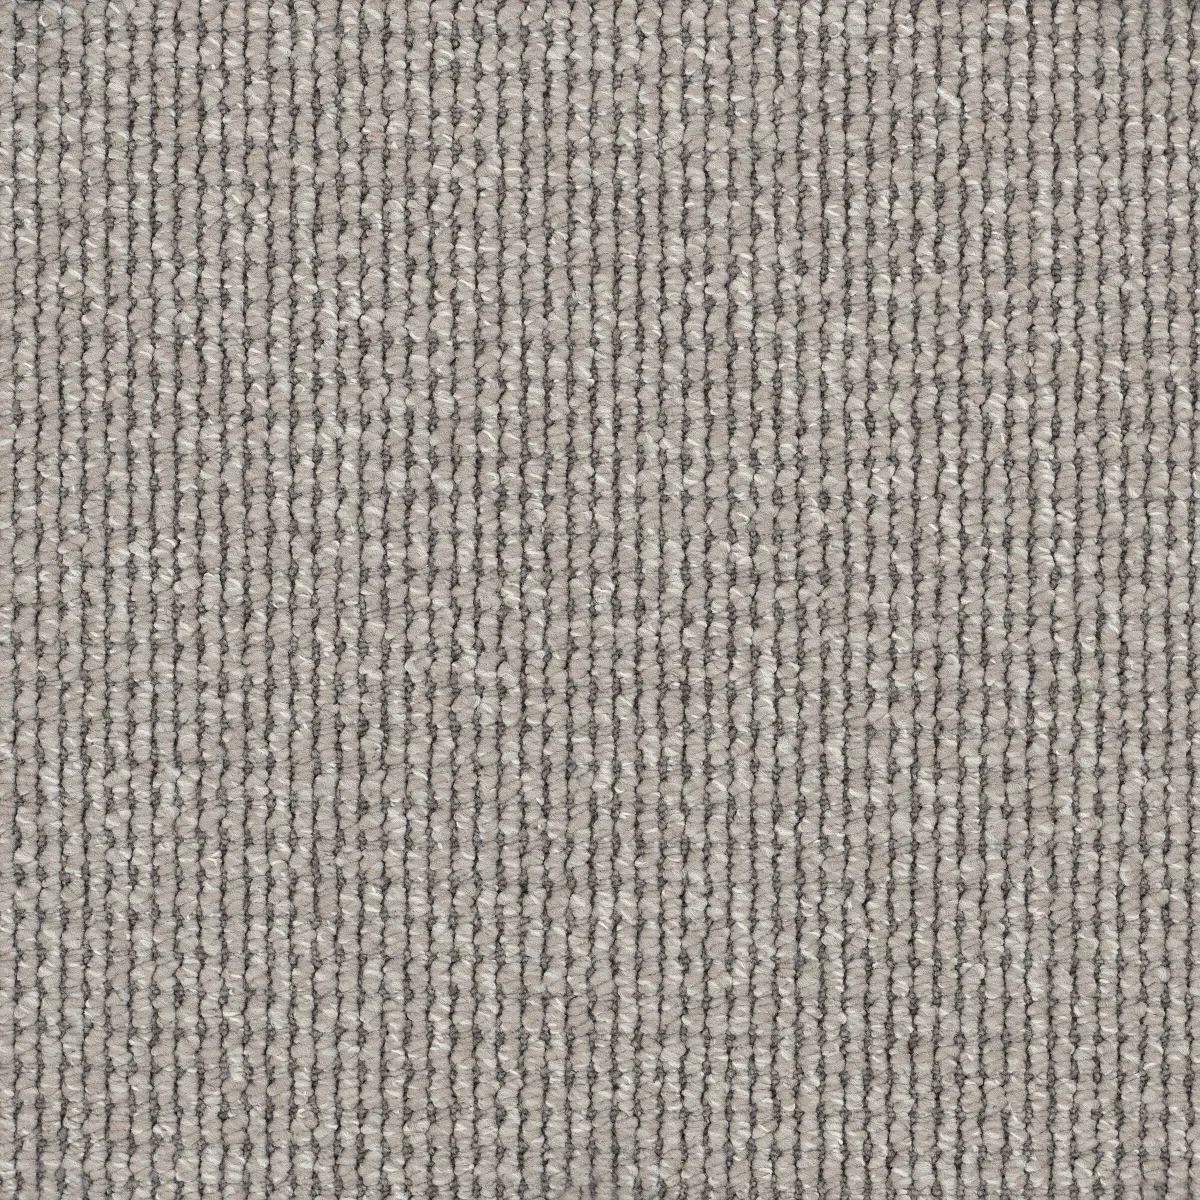 Frontier Carpet range in Nurture colour